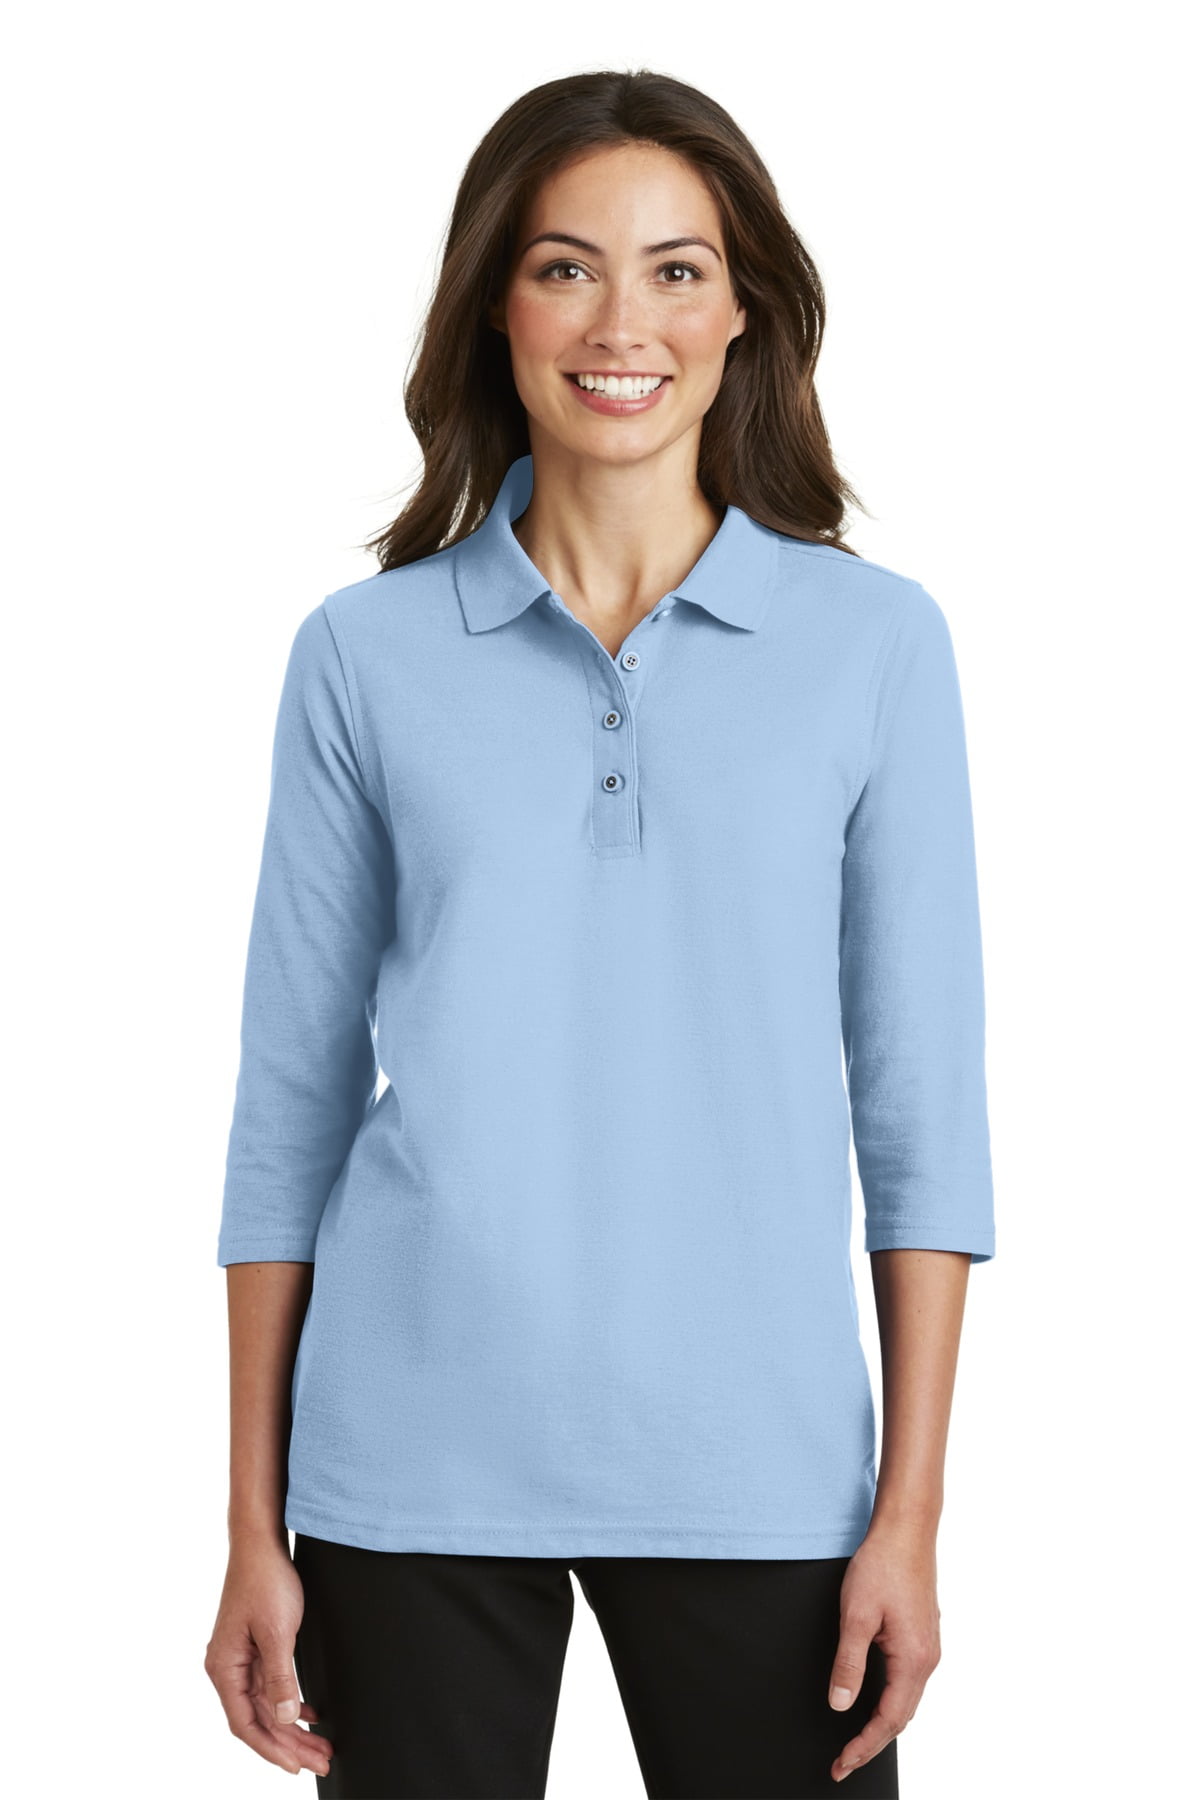 port authority women's polo shirts